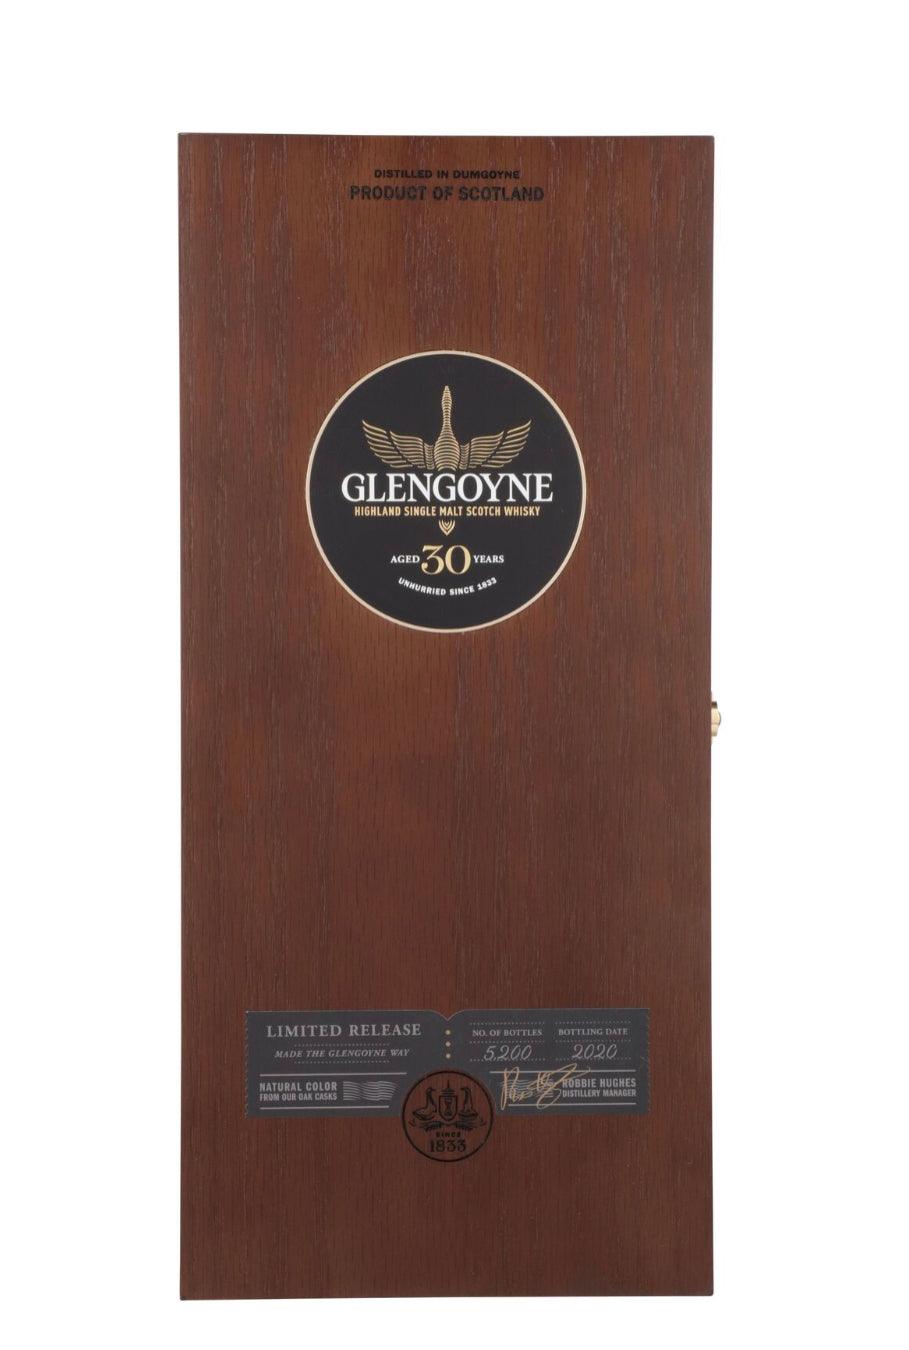 Glengoyne Single Malt Scotch Limited Release 30 Years Old - Liquor Luxe